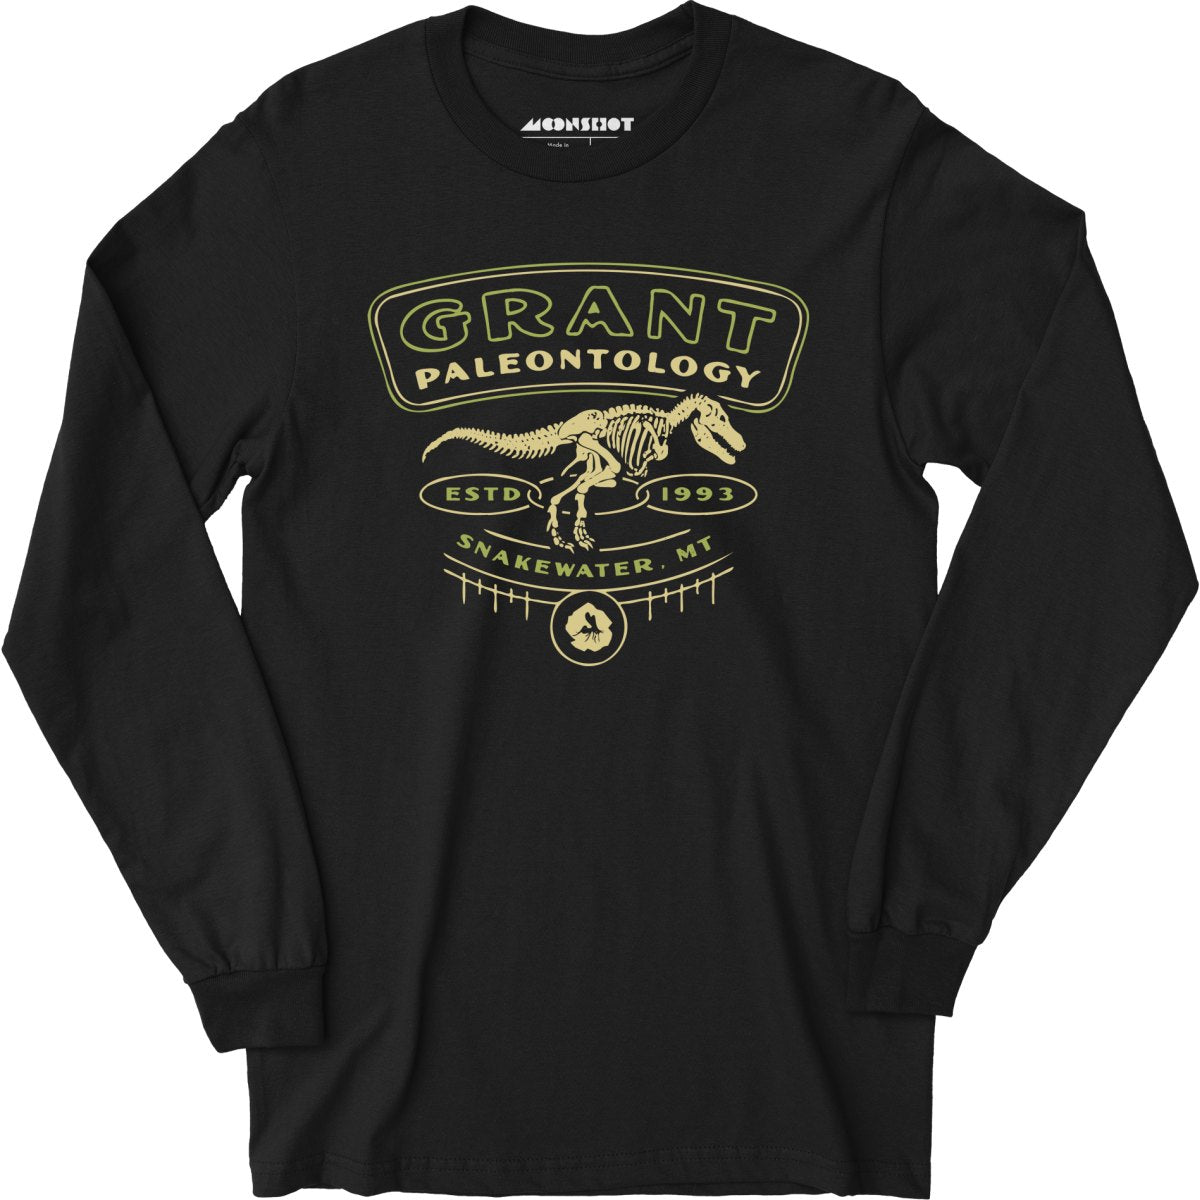 Grant Paleontology - Long Sleeve T-Shirt